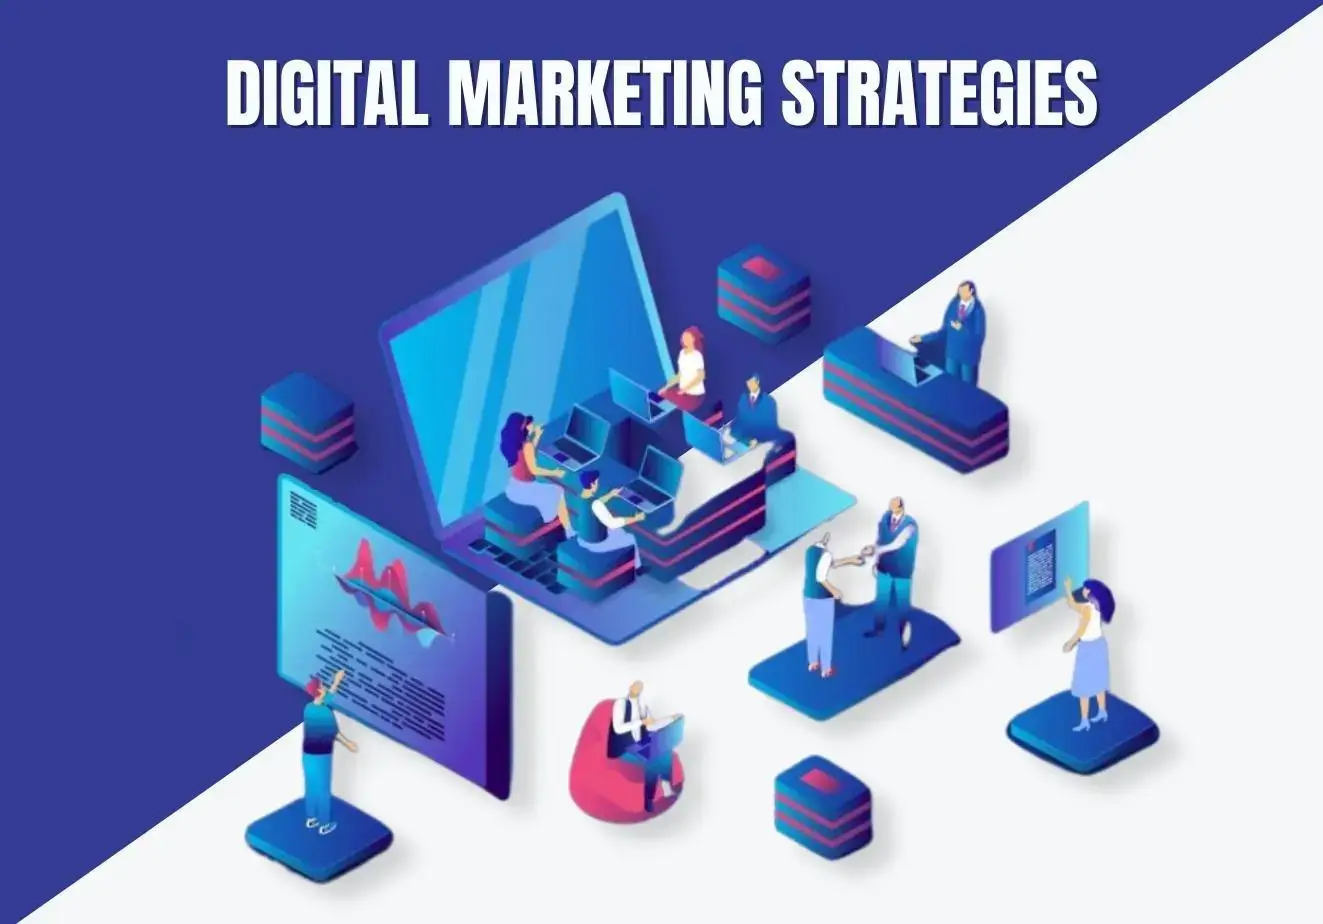 Digital Marketing Strategies and plans